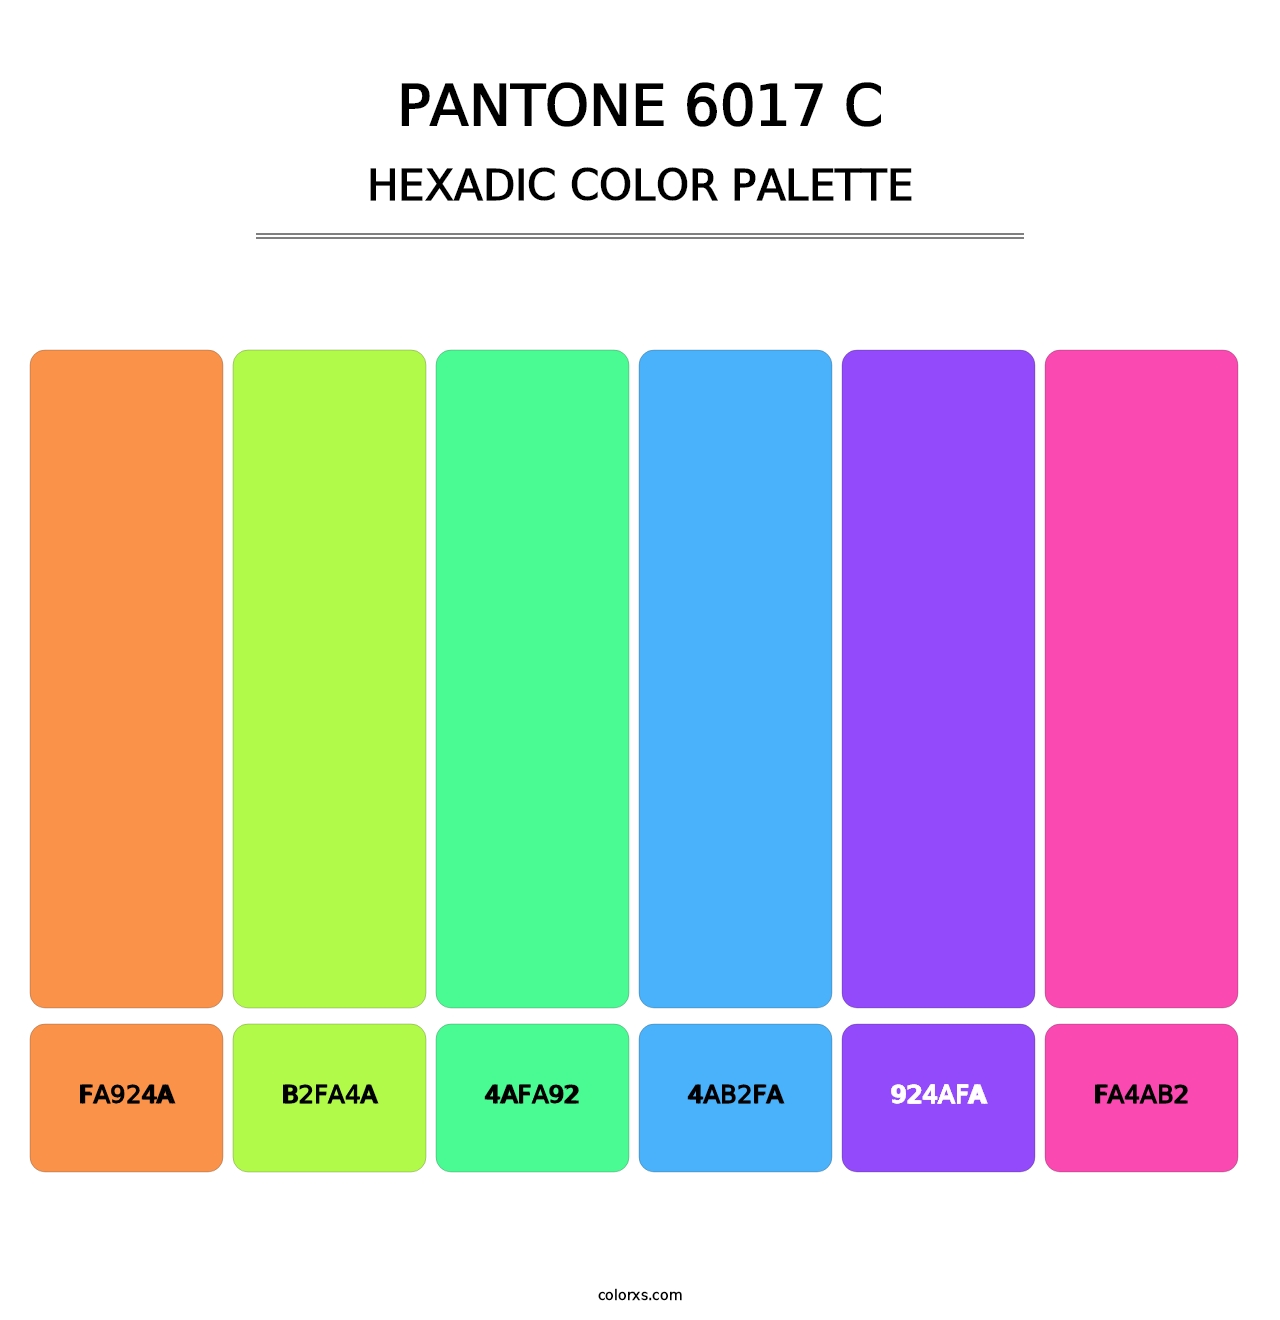 PANTONE 6017 C - Hexadic Color Palette